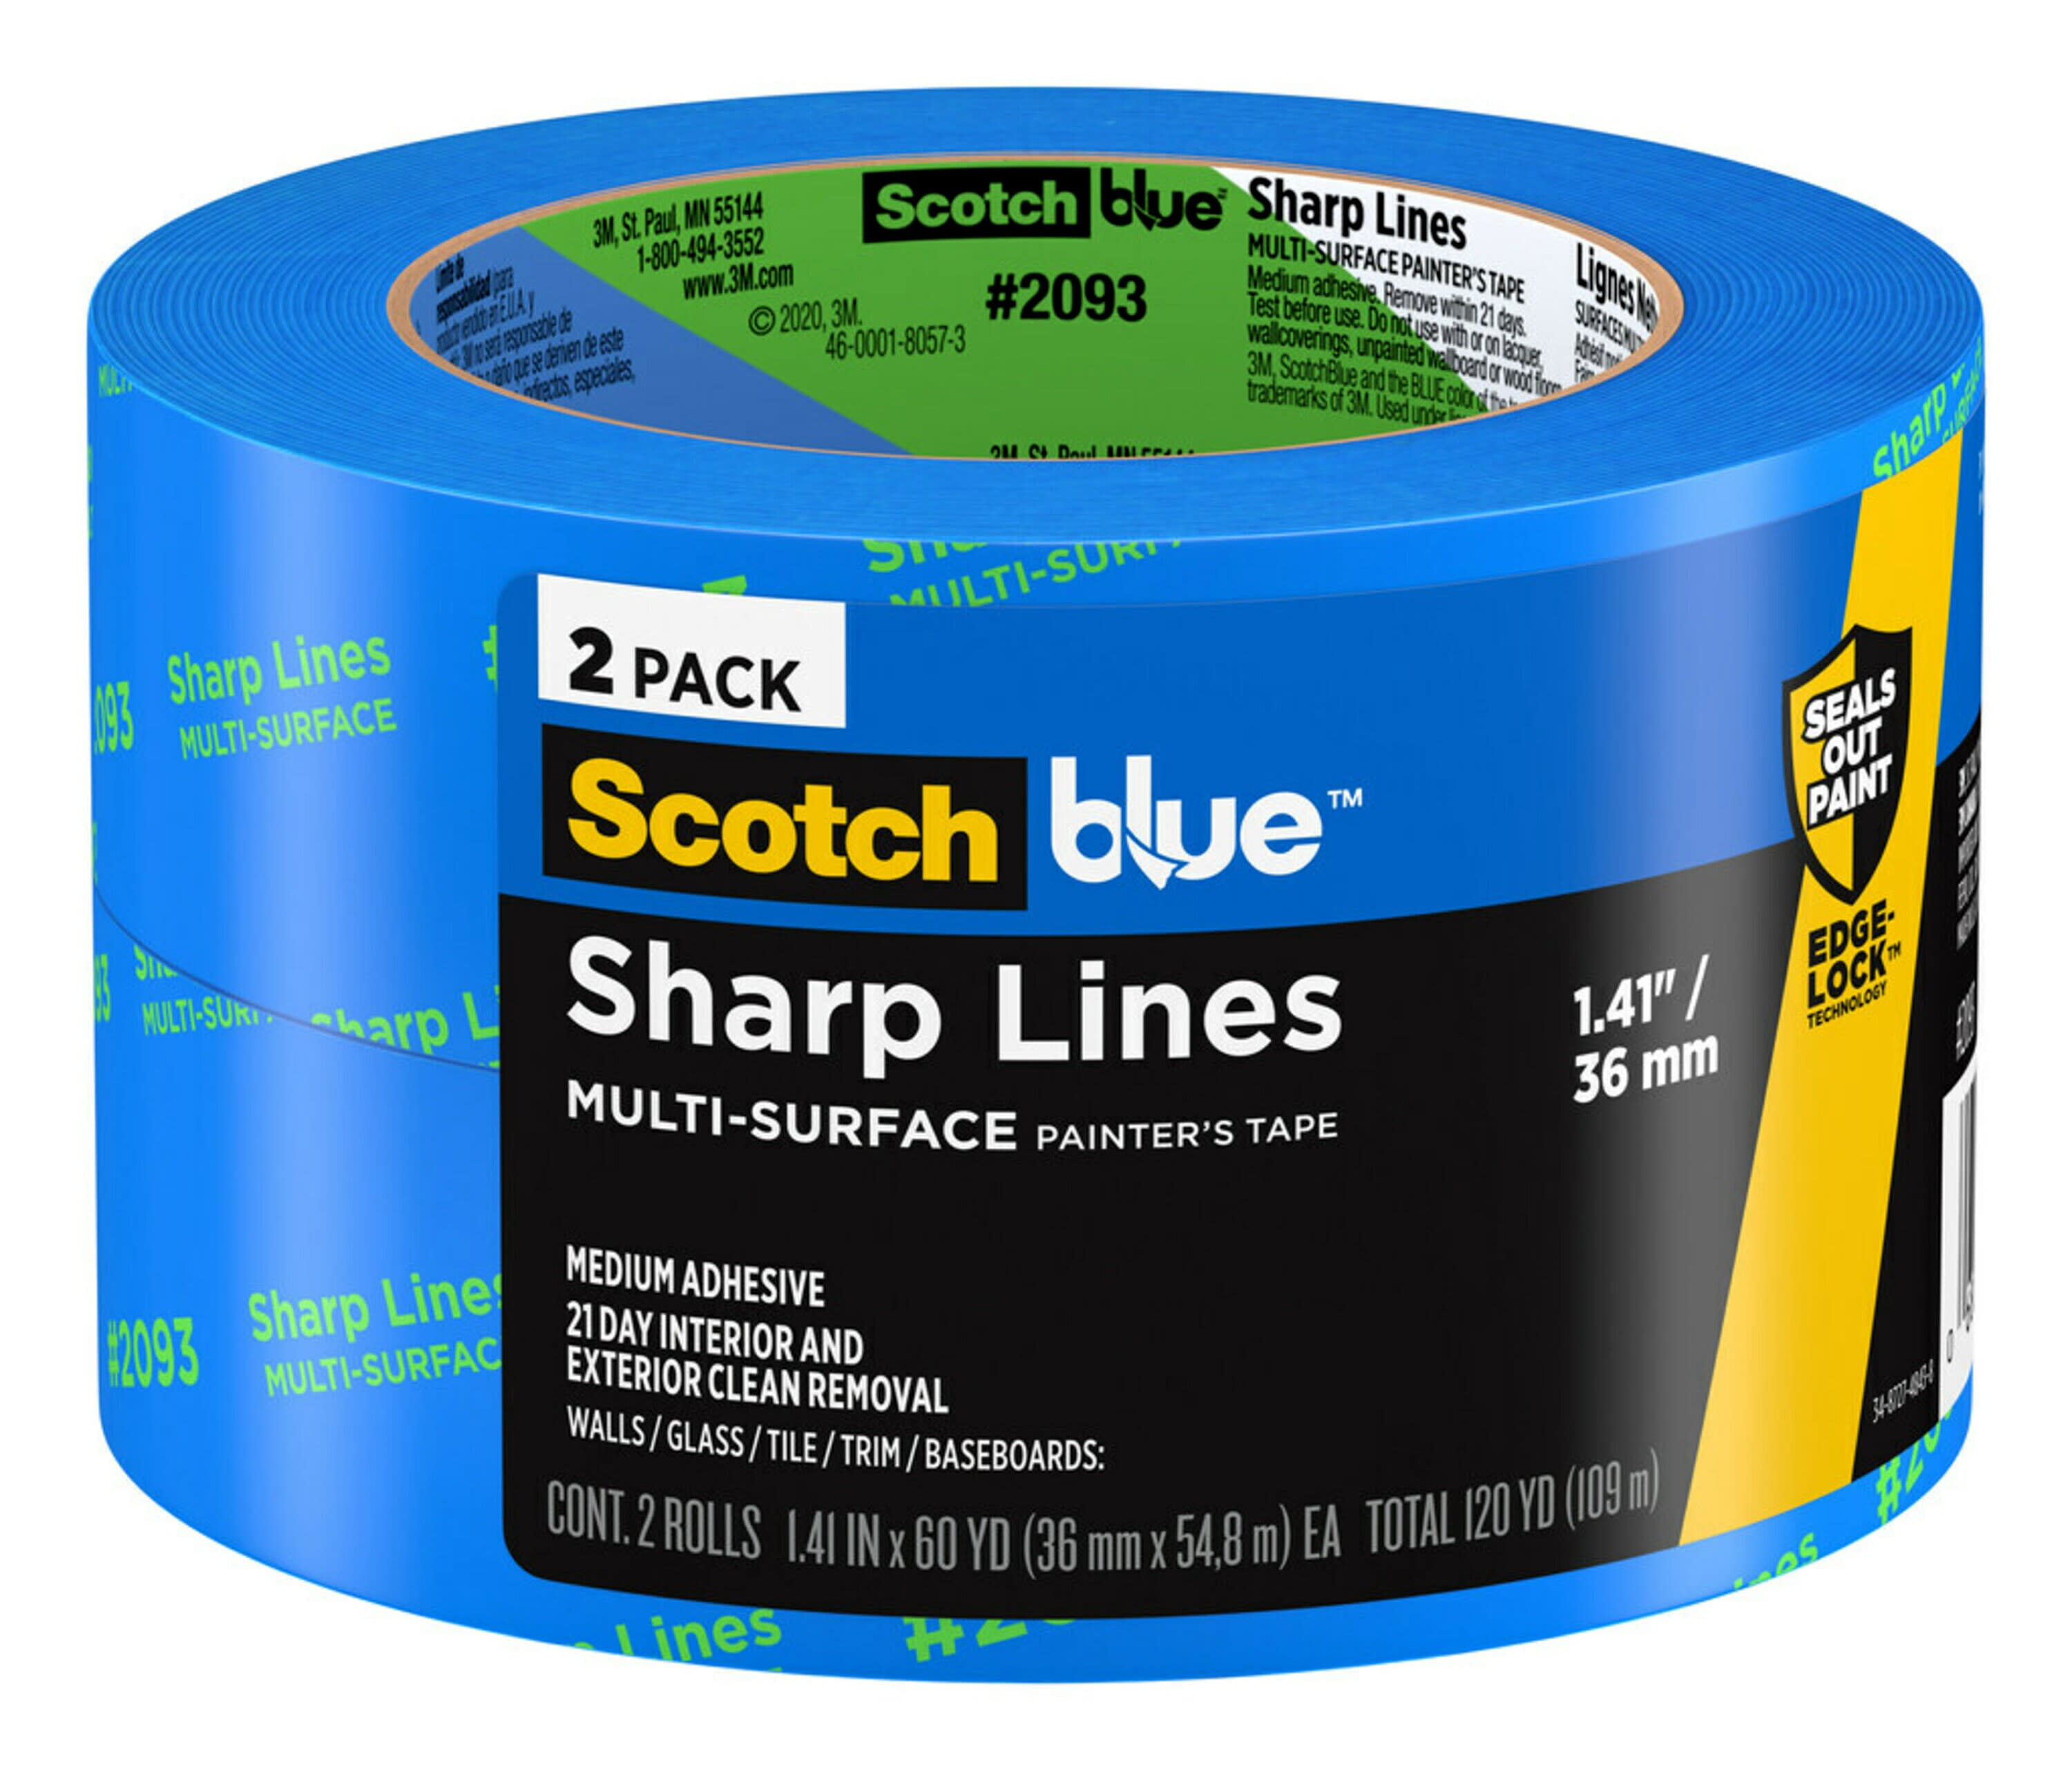 ScotchBlue Sharp Lines Painter's Tape, Blue, 1.41 in x 60 yd, 2 Rolls